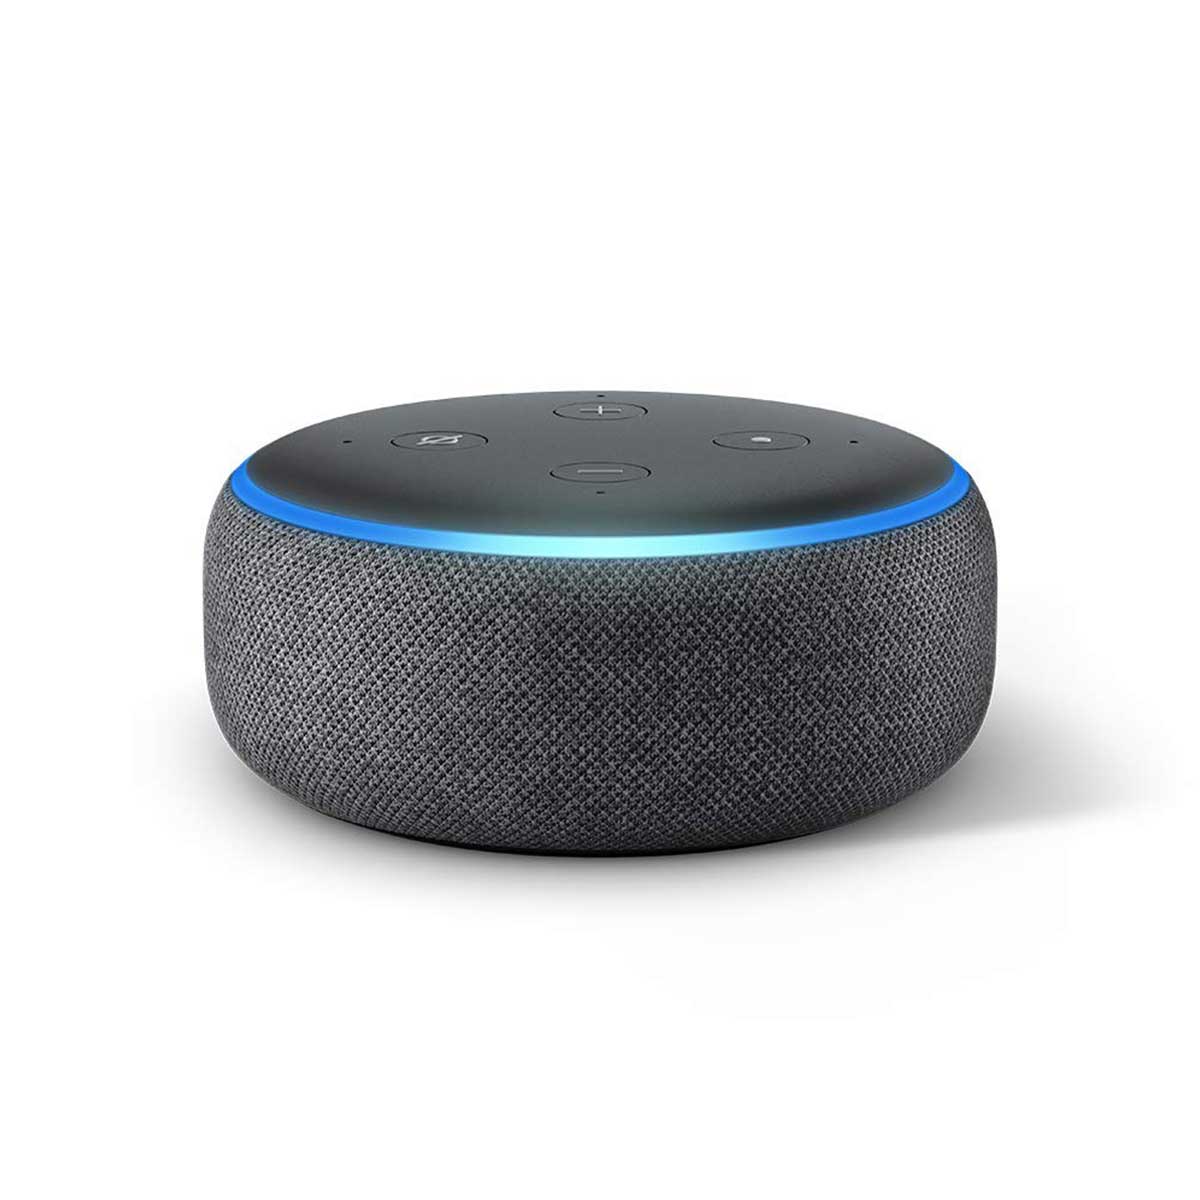 Amazon - Echo Dot 3rd Generation - Charcoal Gray